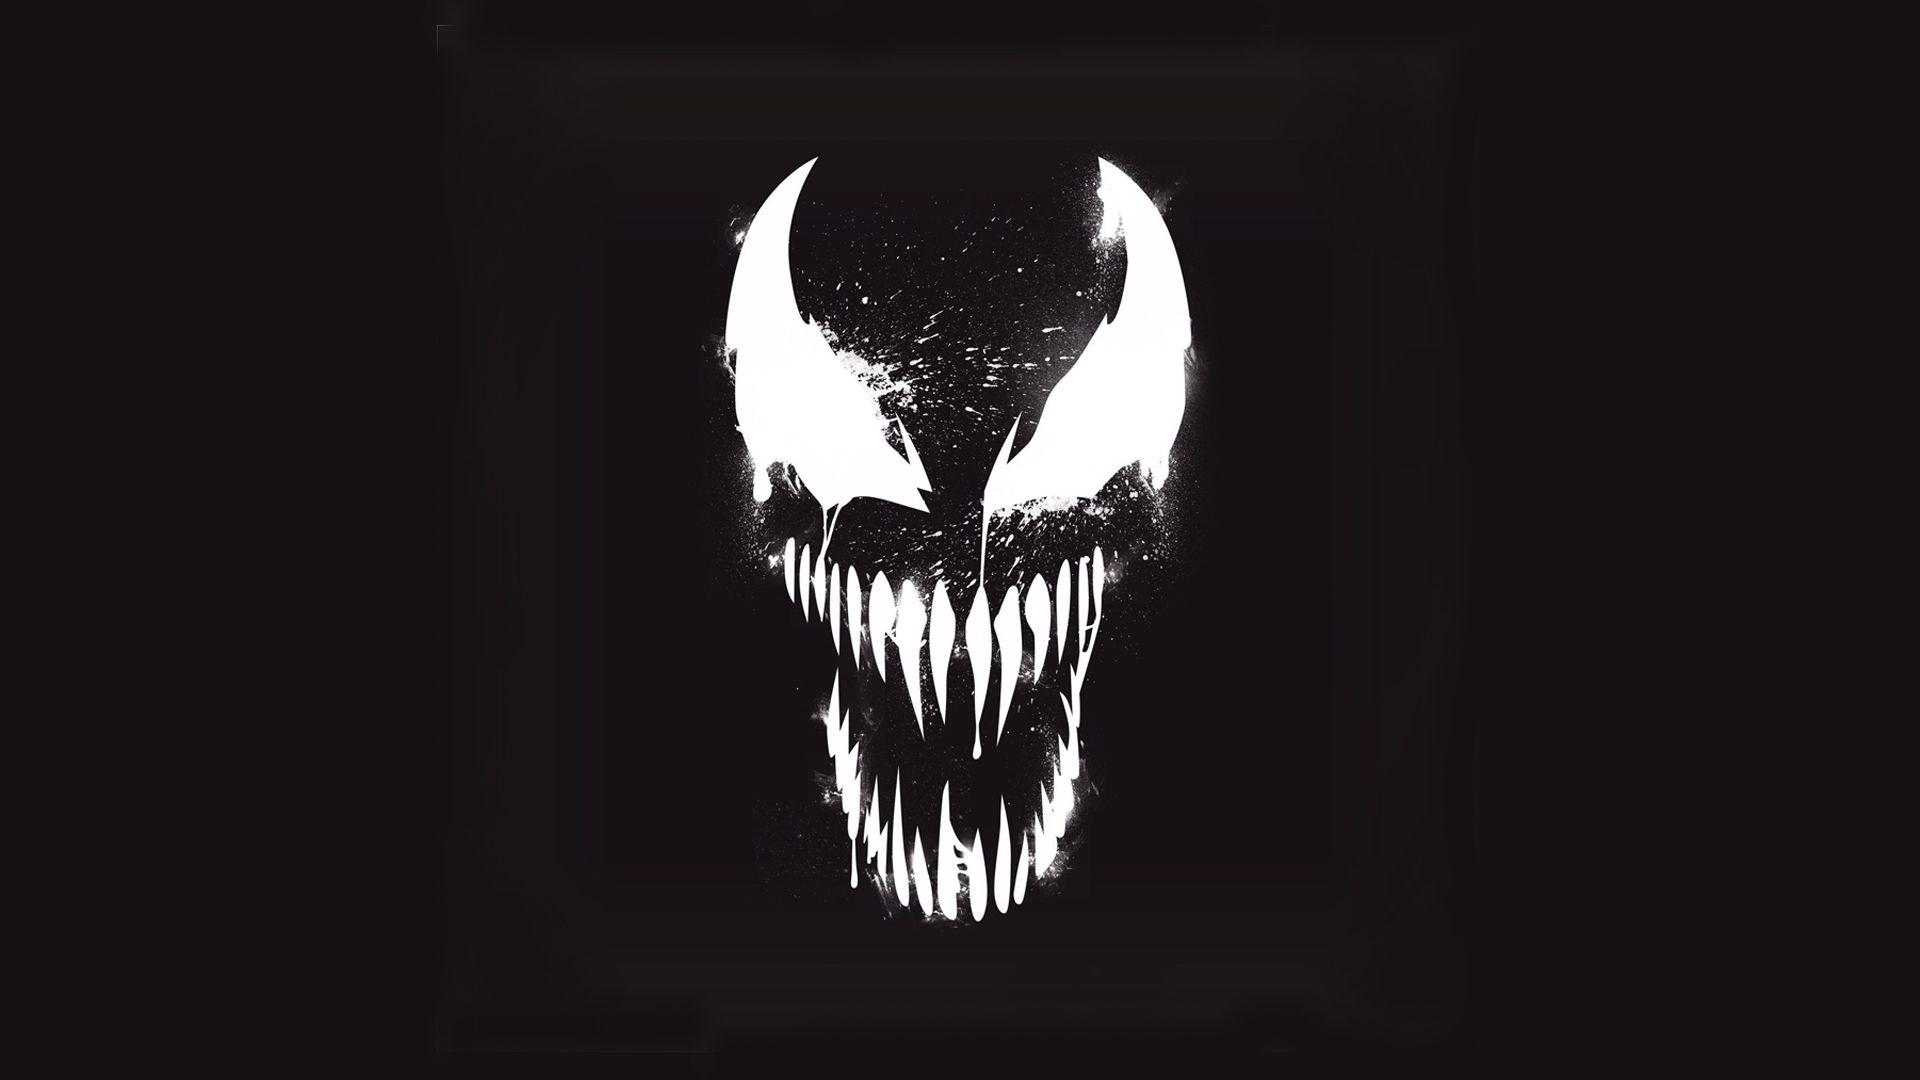 Venom Logo For Pubg Wallpapers